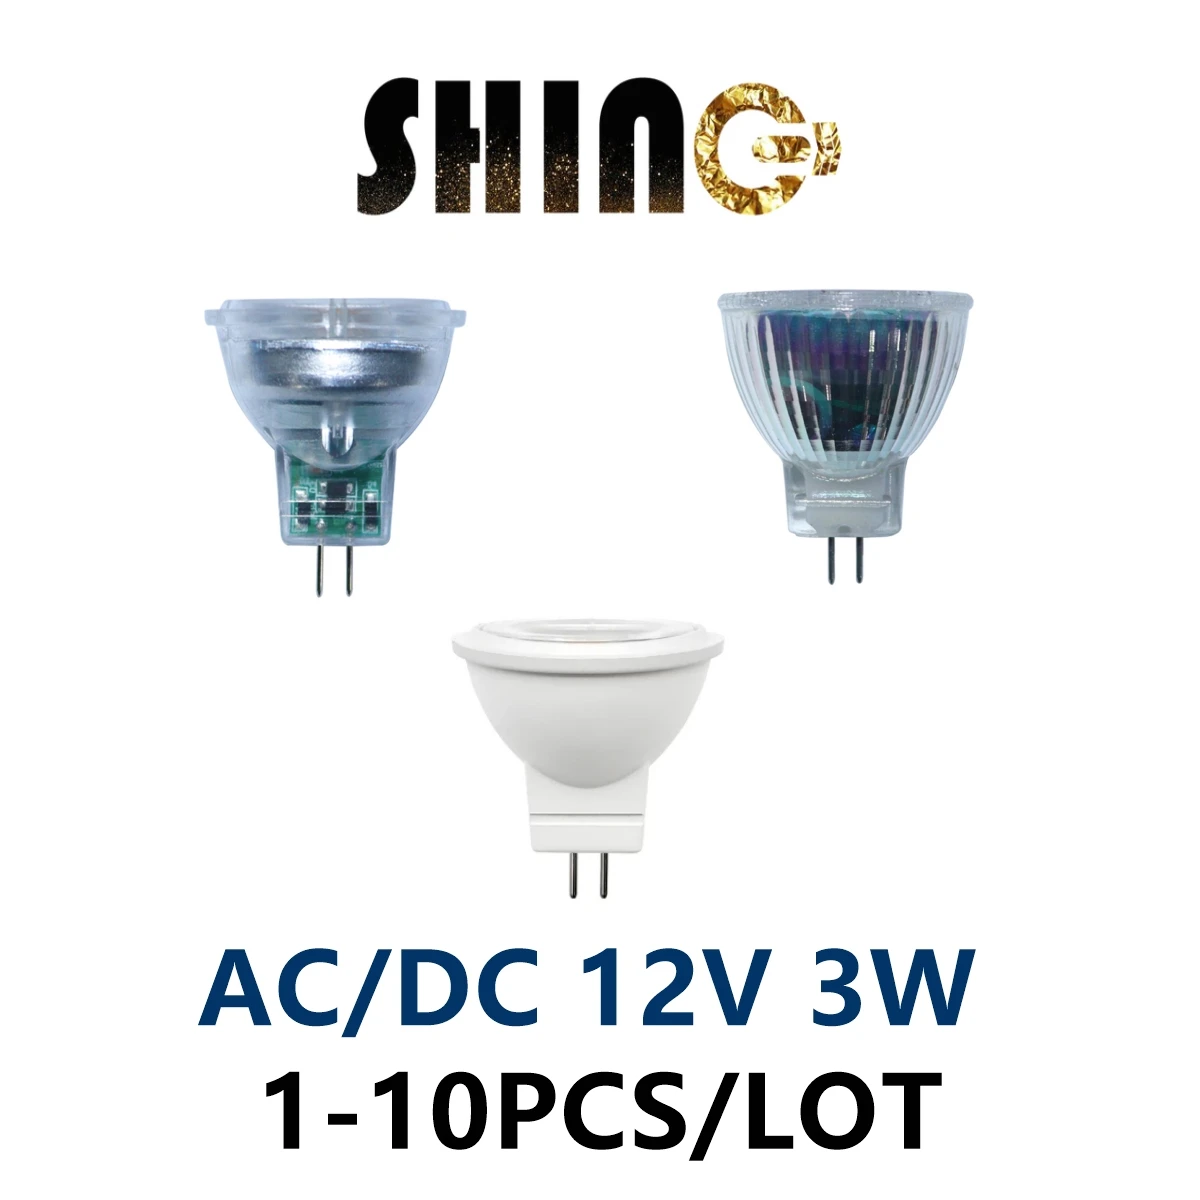 

LED mini spot light MR11 GU4 Low voltage AC/DC 12V 3W COB lamp bead high bright warm white light replace 20W 50W halogen lamp